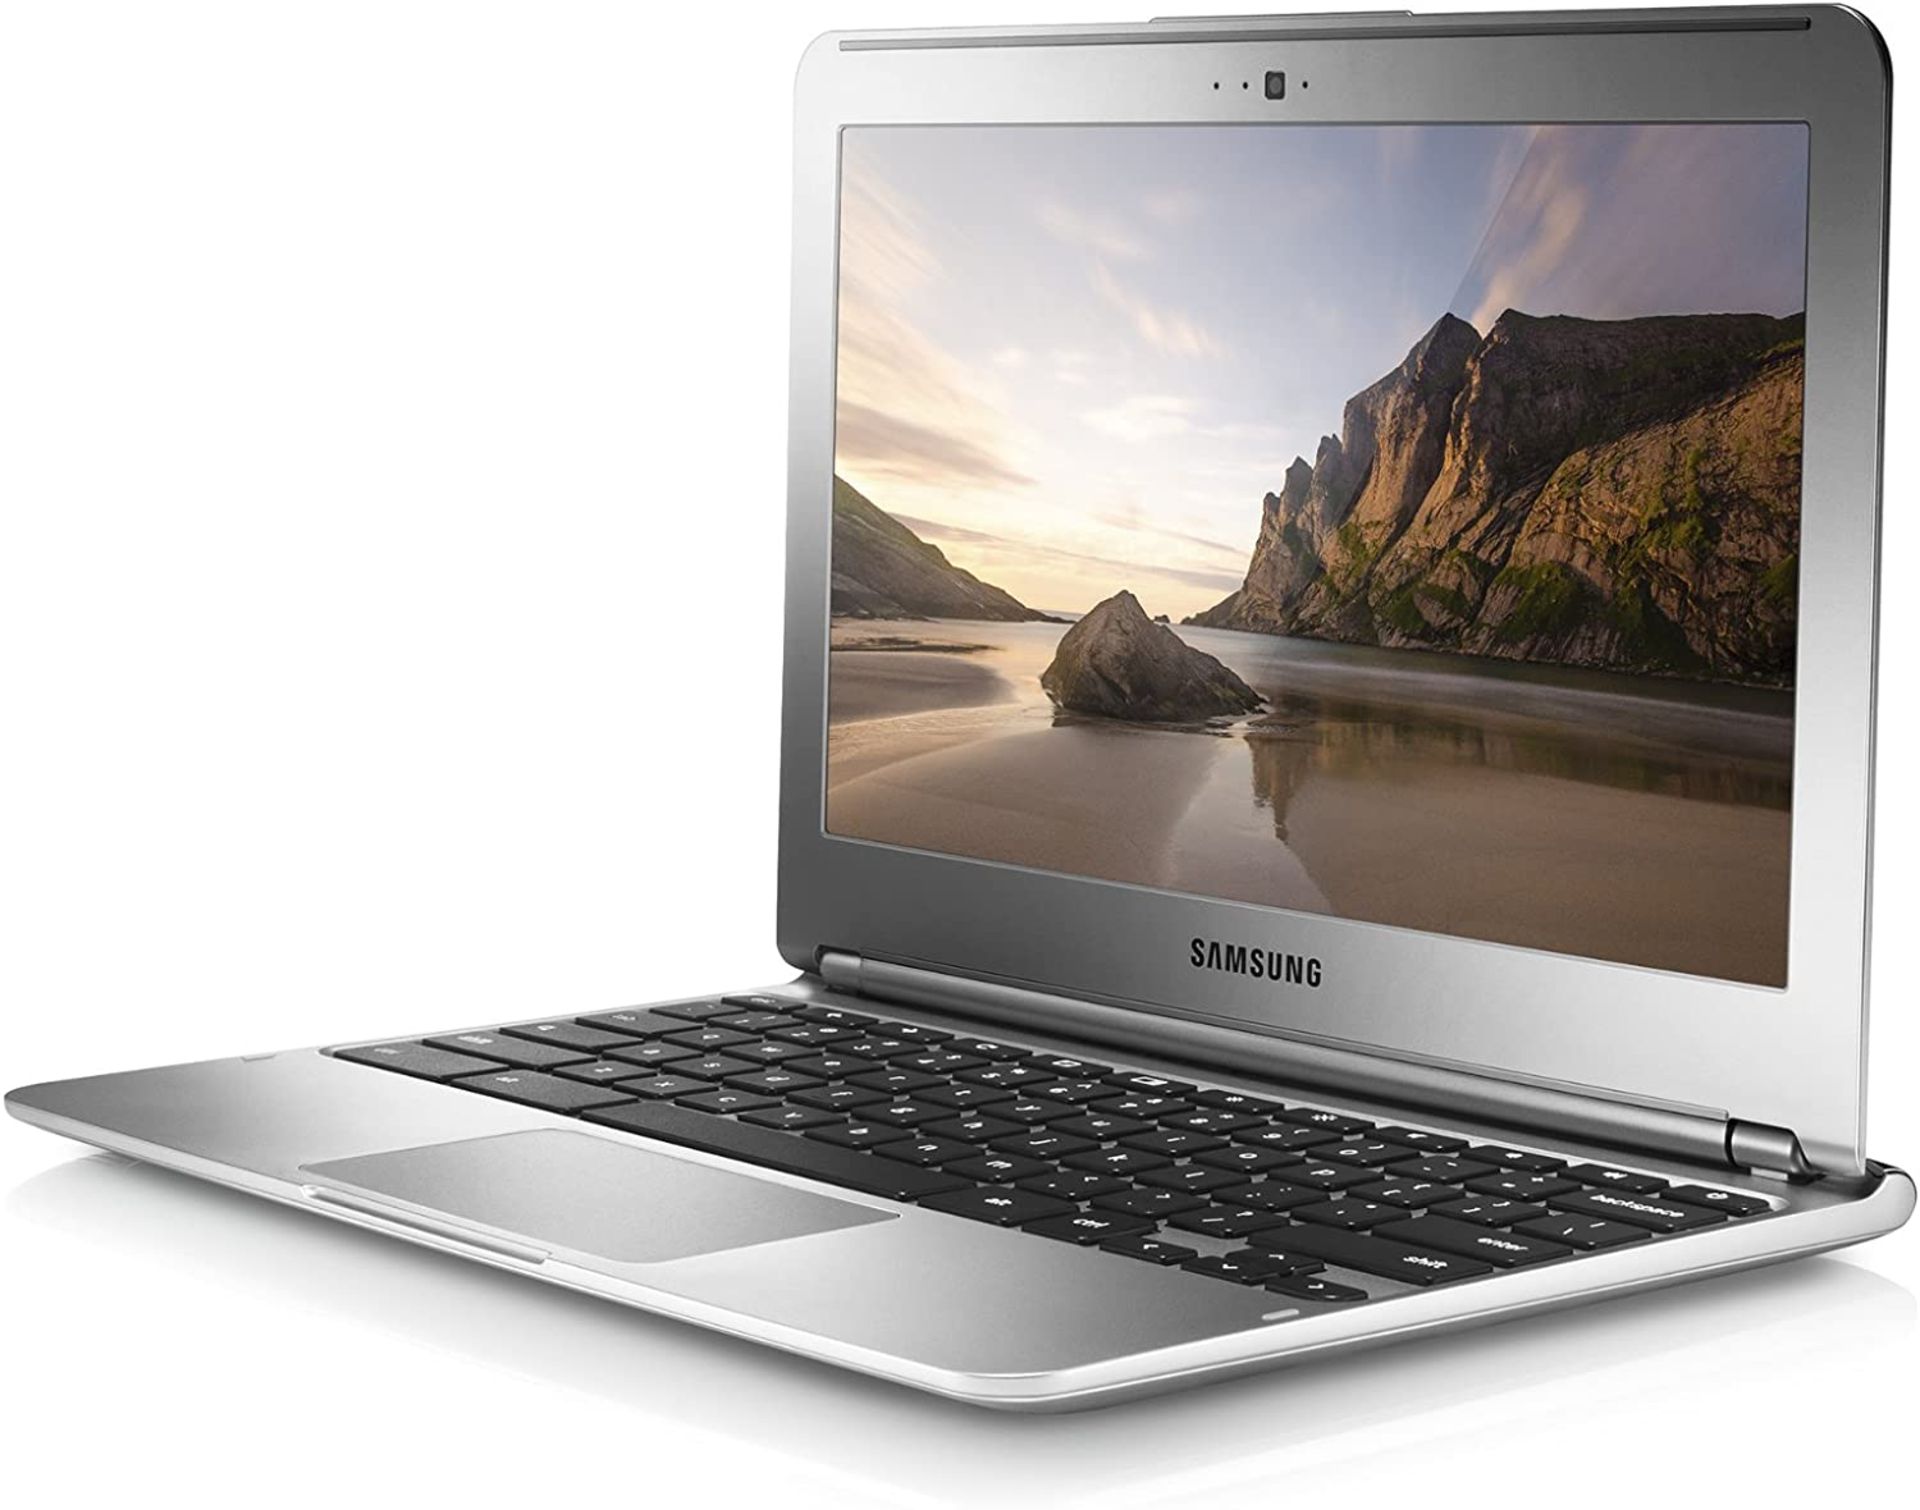 (4) 1 x Grade B - Samsung XE303C12-A01 Chromebook Samsung Laptop 1700 MHz 2048 MB Portable, Fla... - Image 5 of 6